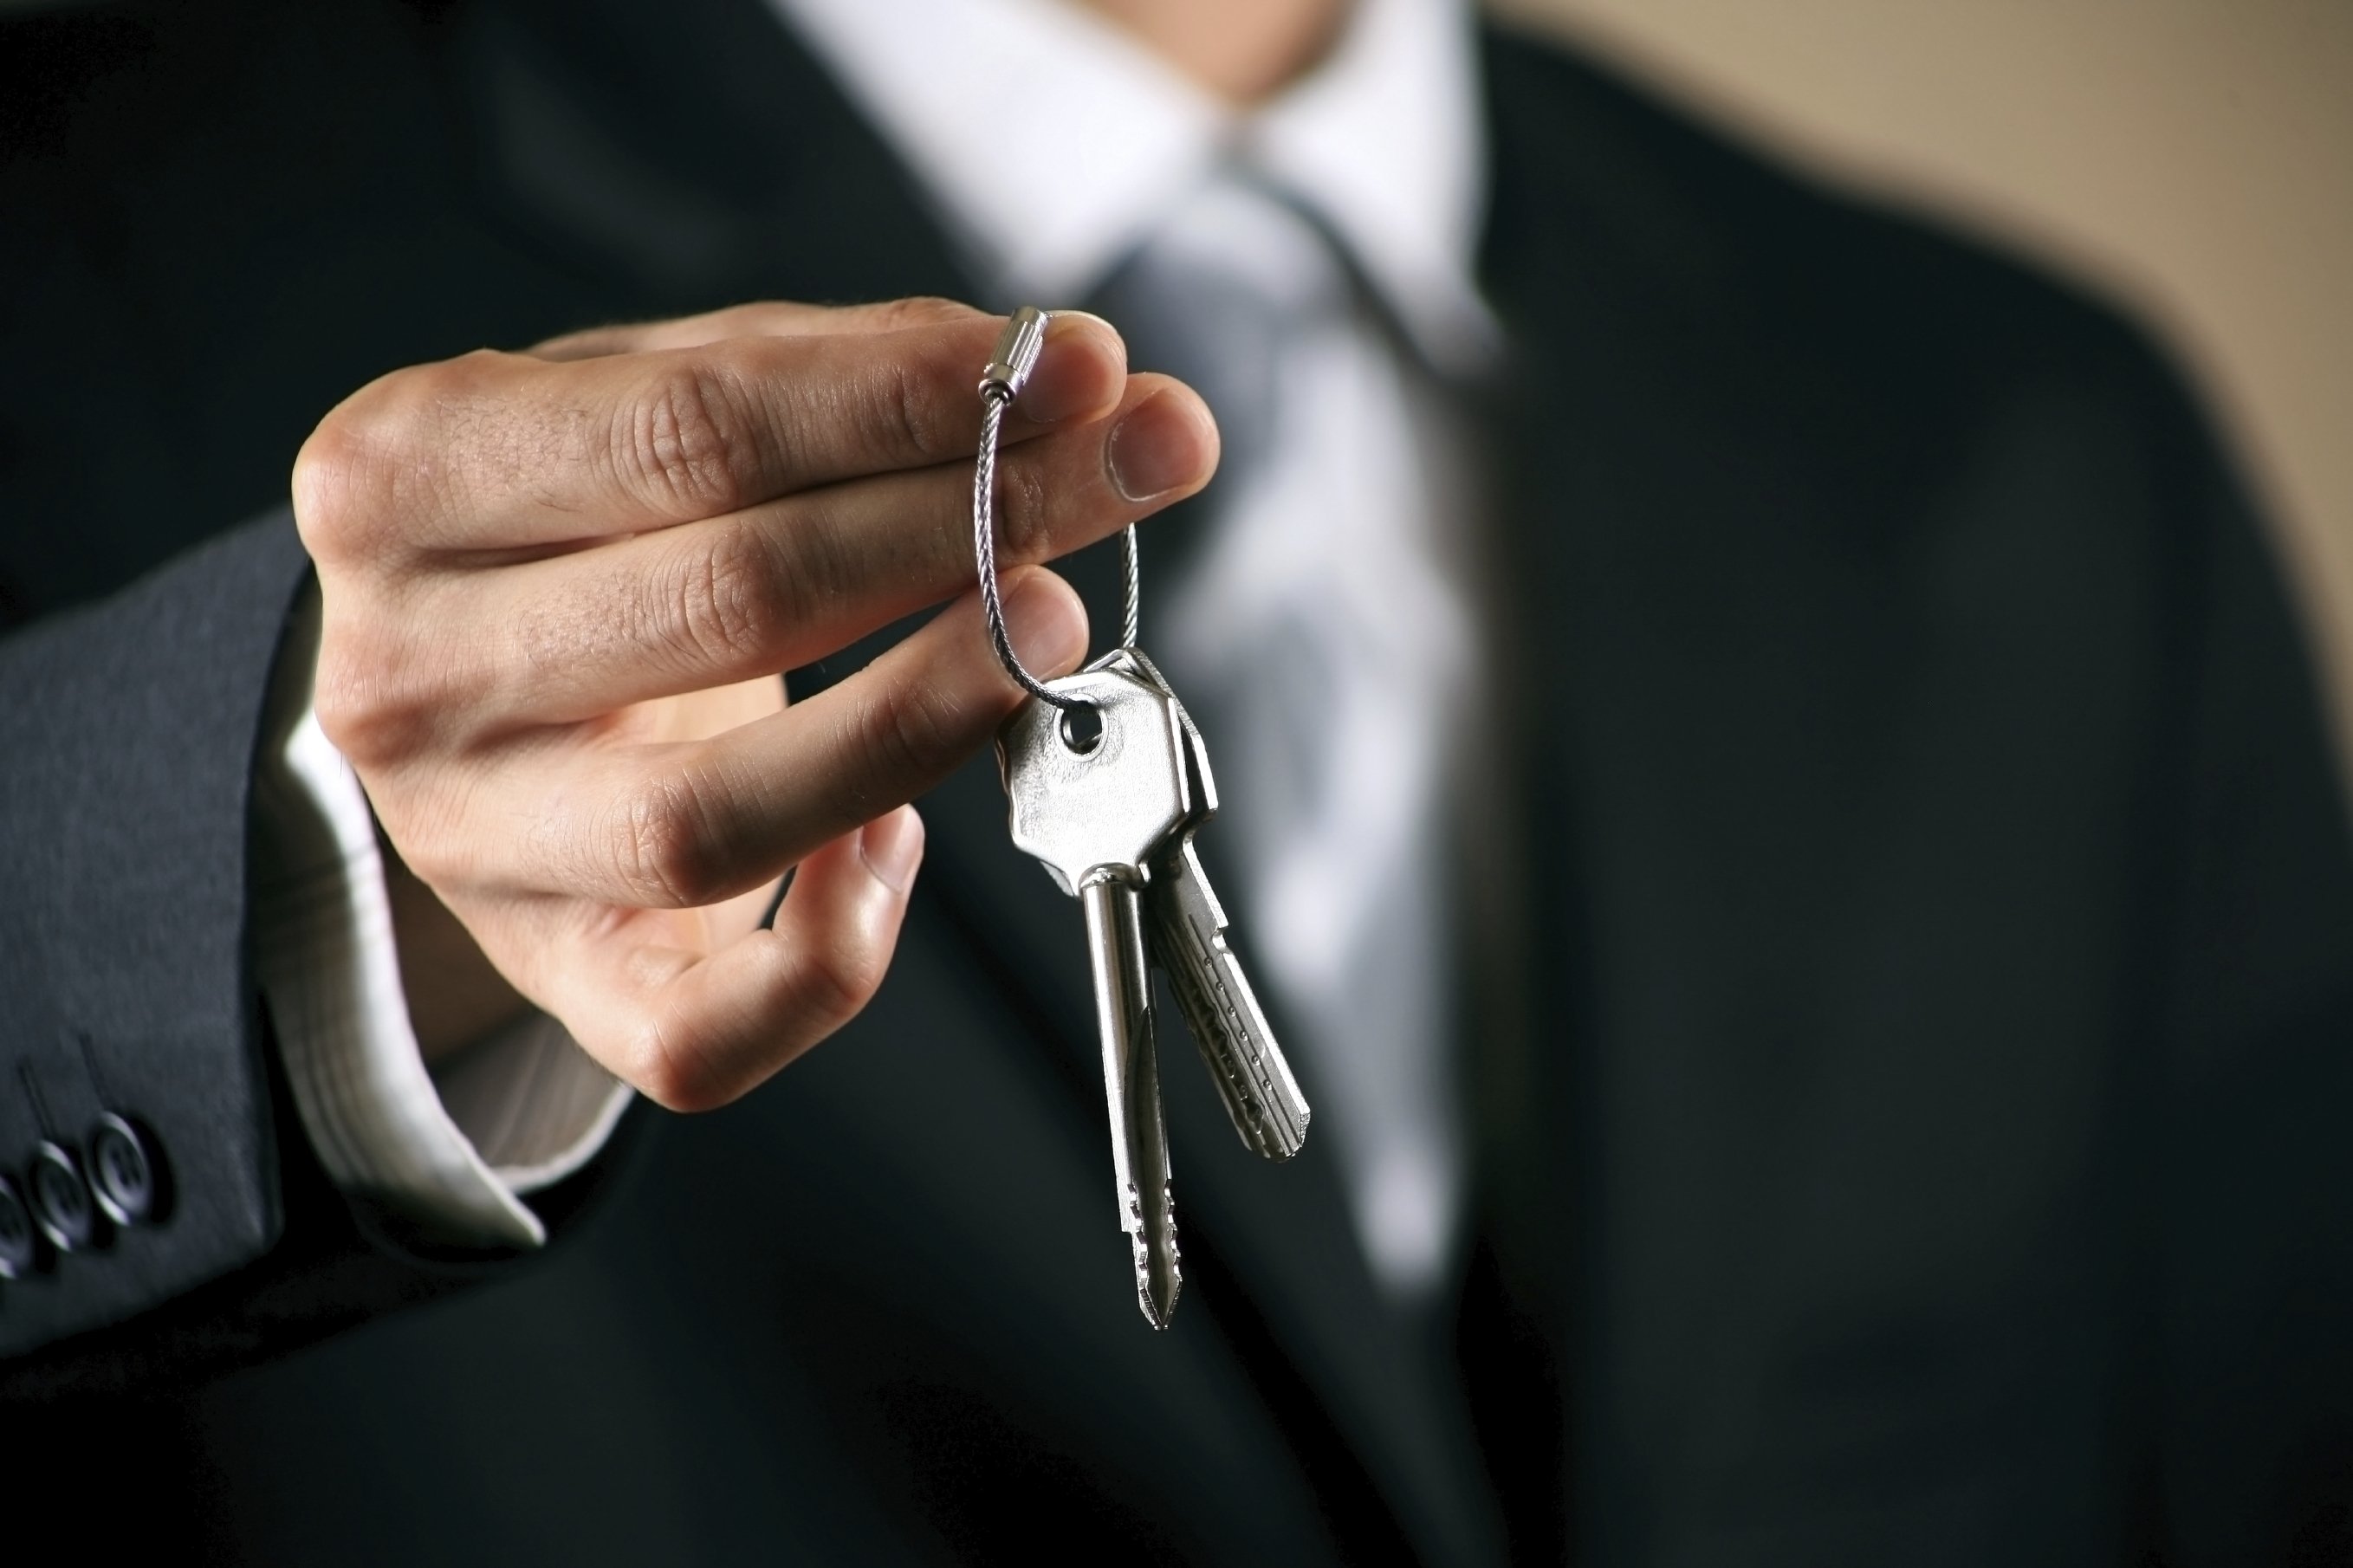 Мужчина дает ключи. Ключи от квартиры. Передают ключи от квартиры. Ключ в руке. Передача ключей.